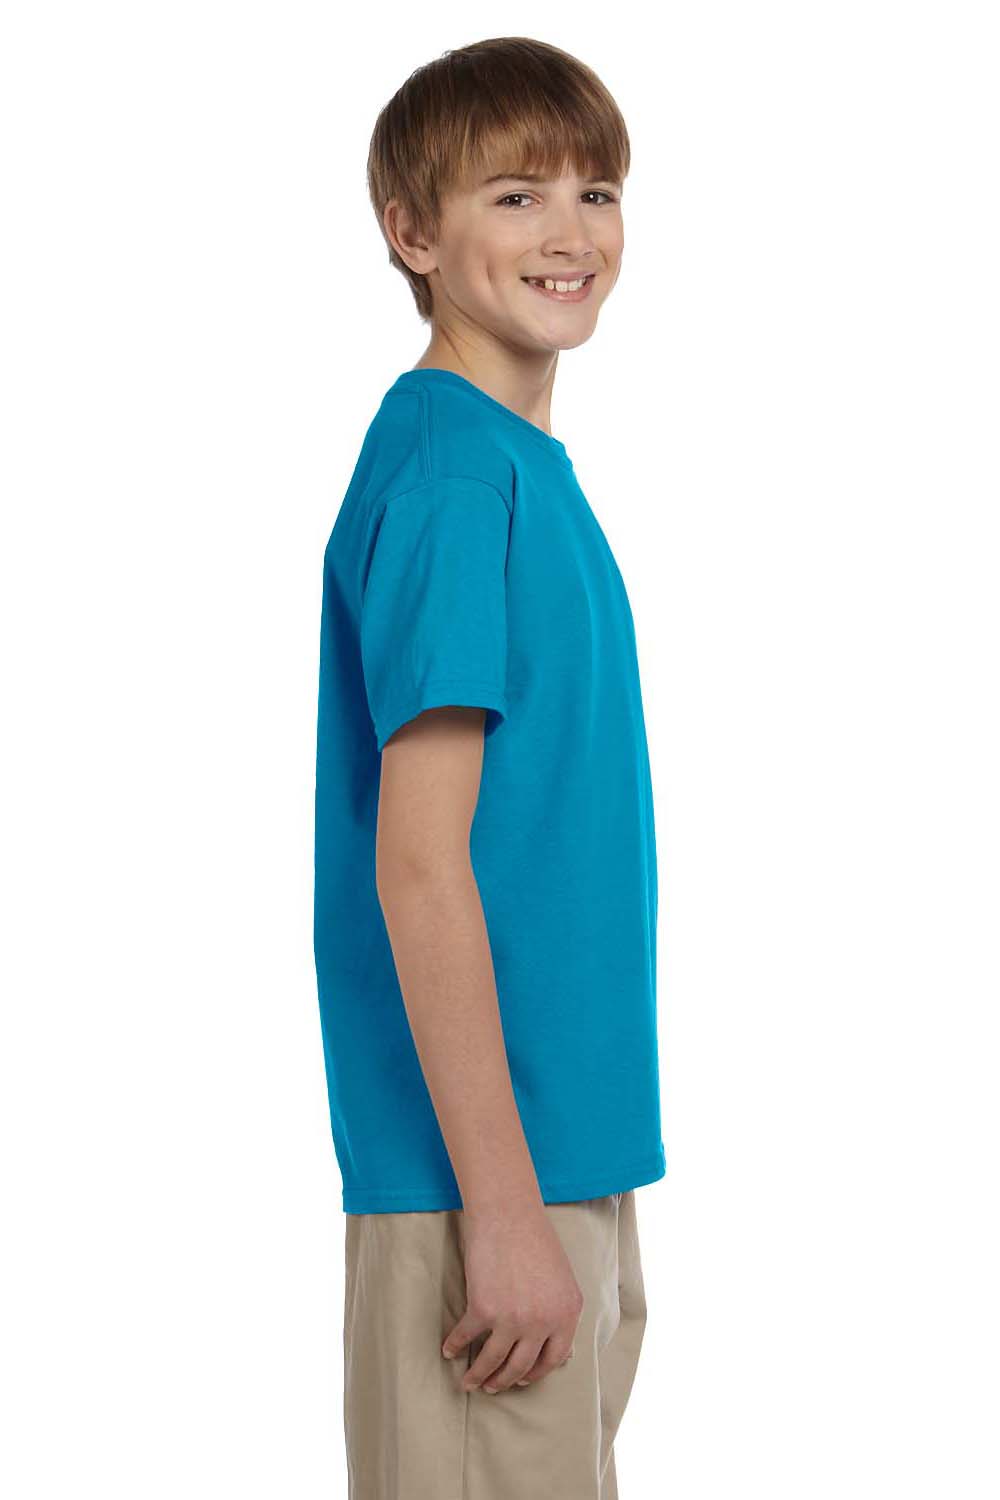 Hanes 5370 Youth EcoSmart Short Sleeve Crewneck T-Shirt Teal Blue Side